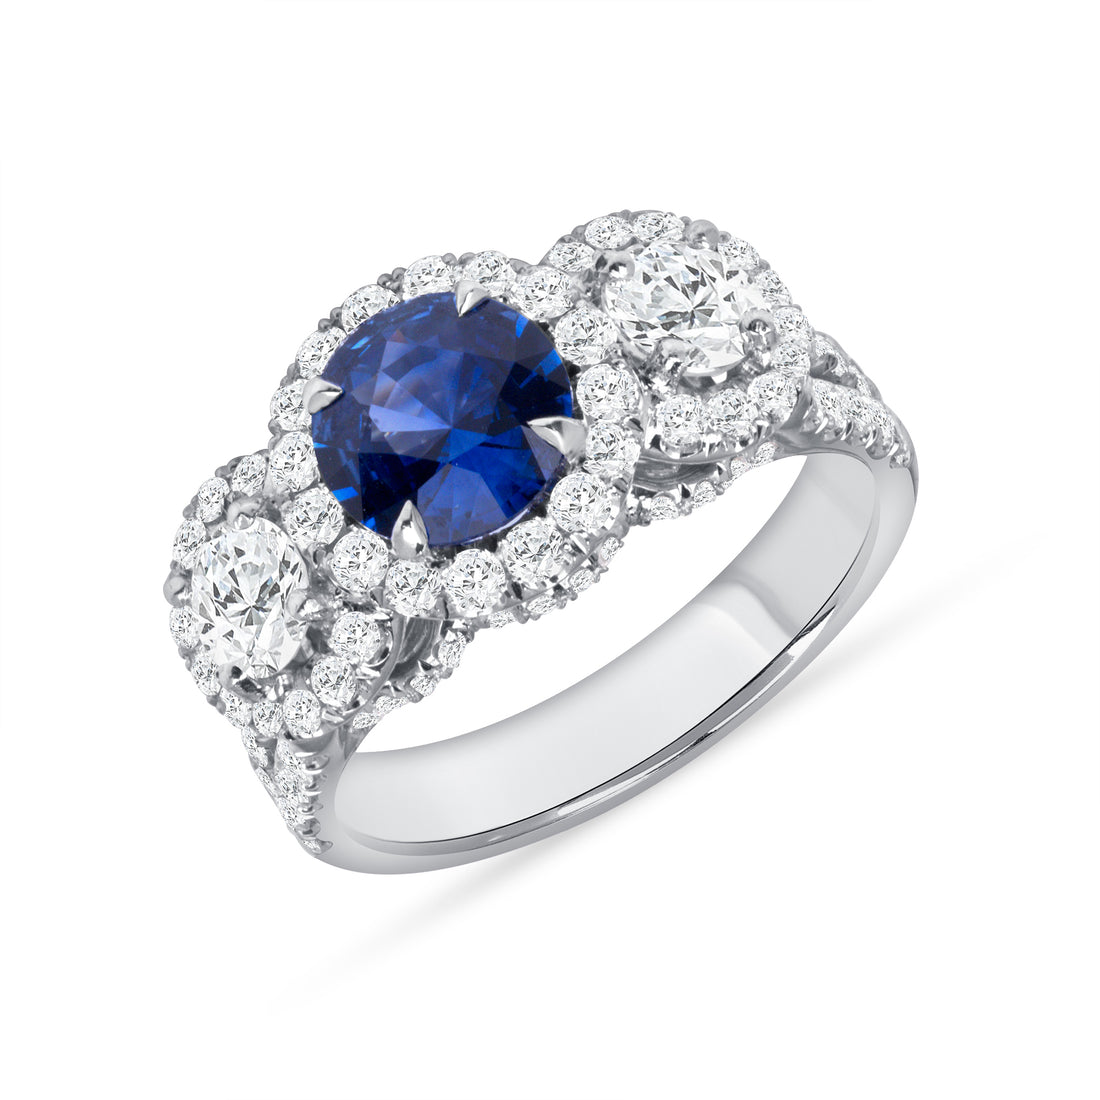 3.05 CT Round Brilliant Blue Sapphire and Diamond Halo Three Stone Ring in Platinum